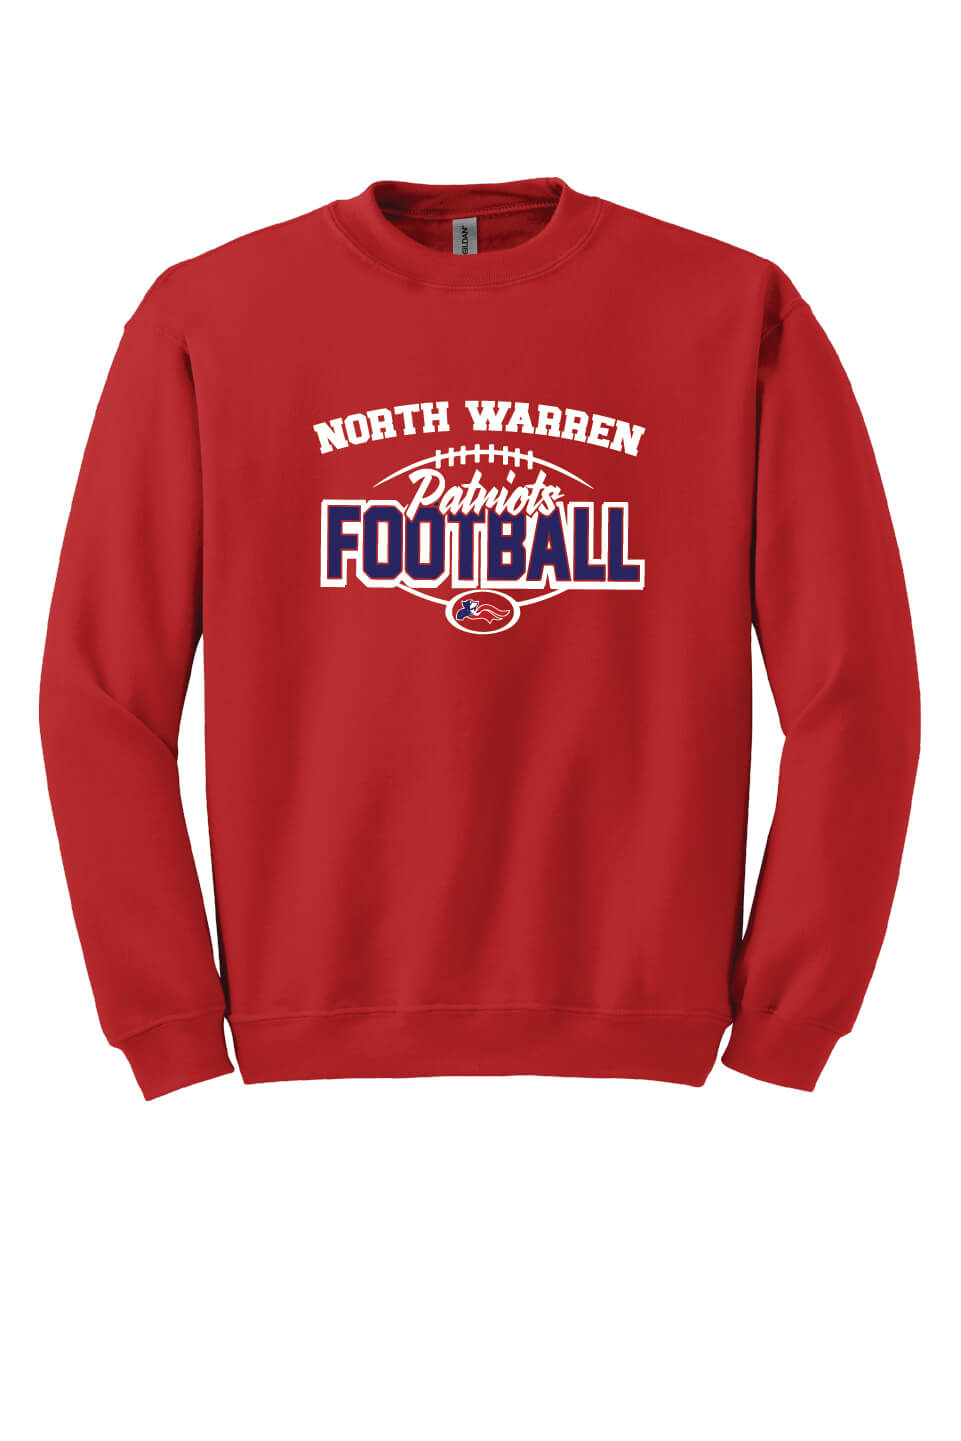 NW Patriots Football Crewneck Sweatshirt red